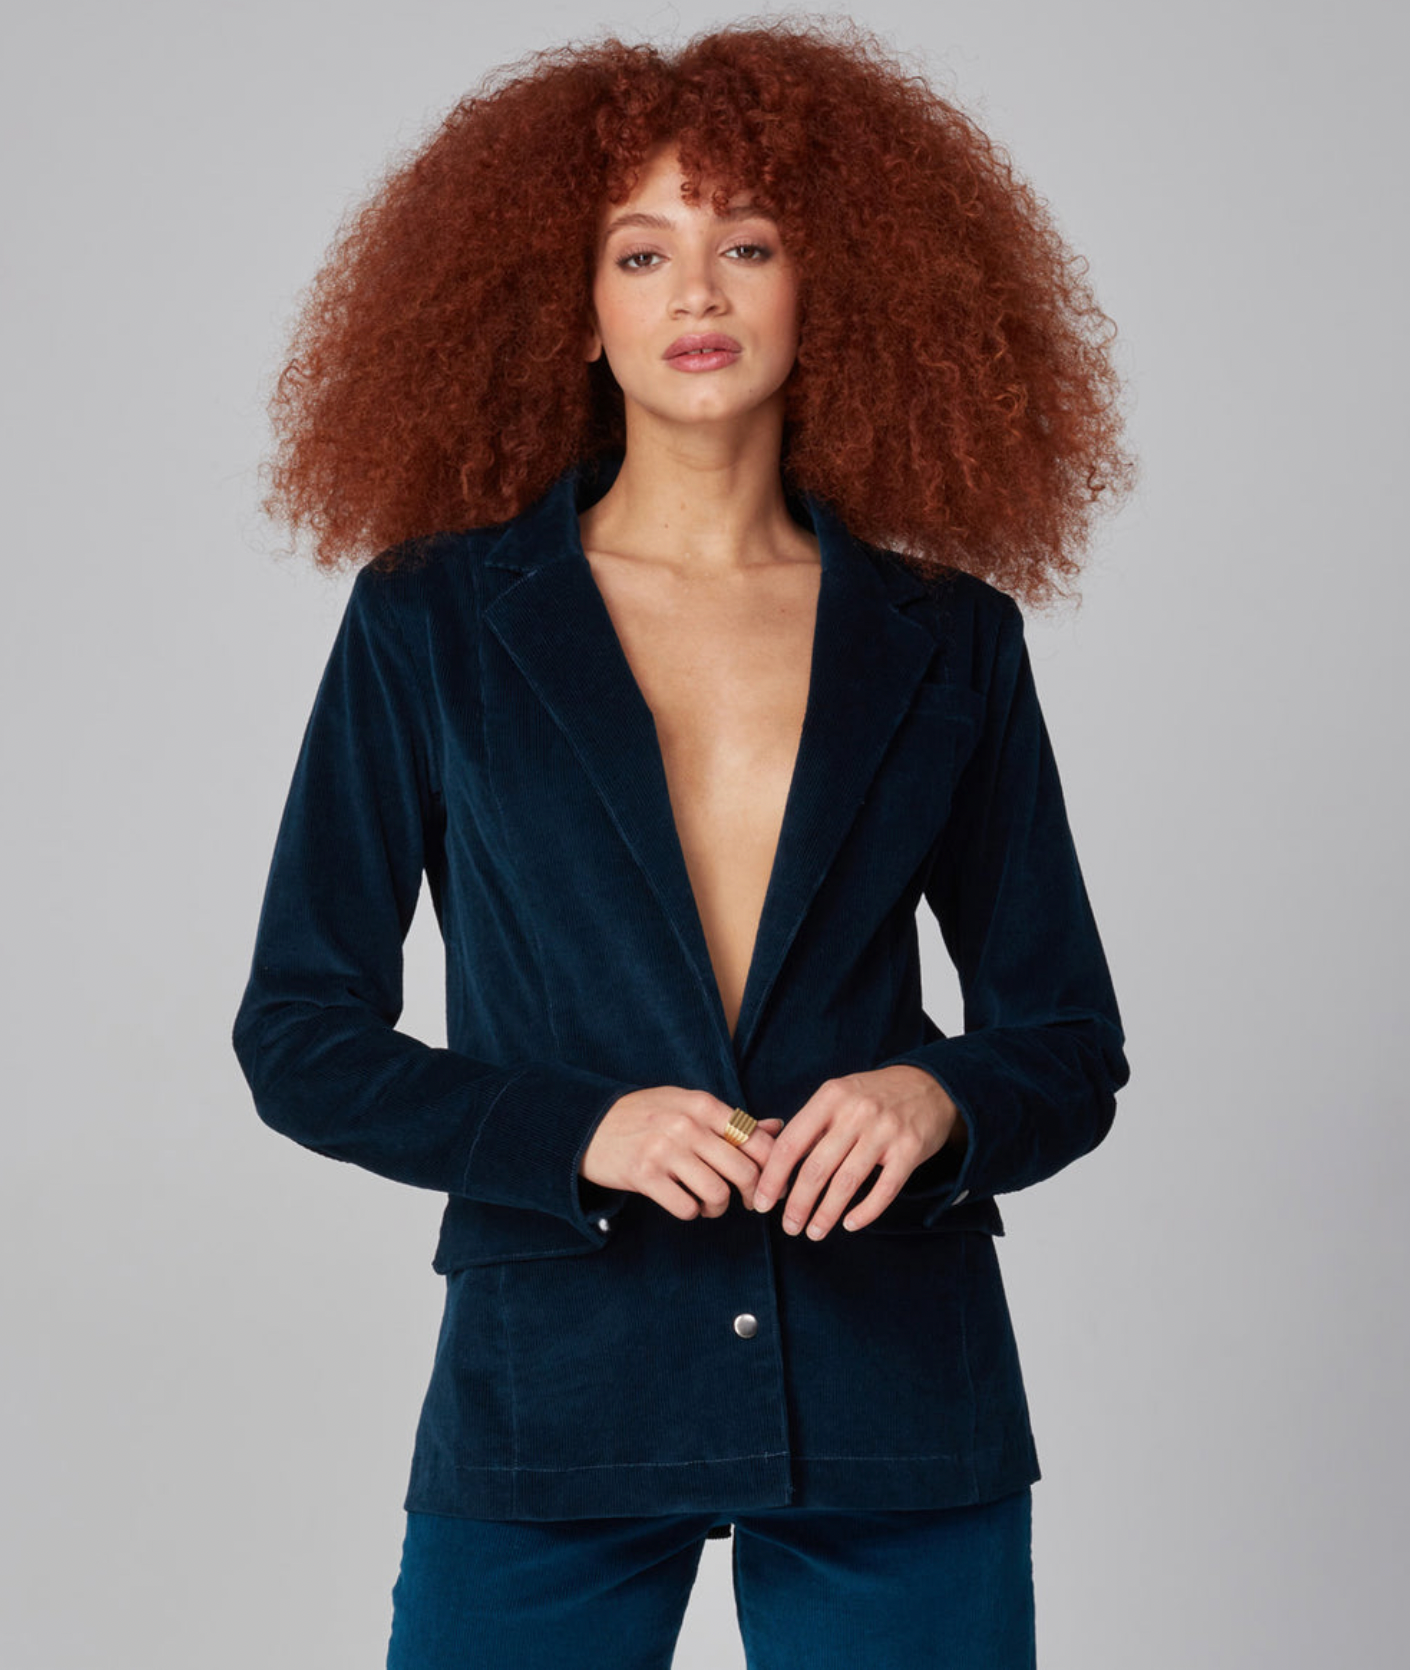 Lola Jeans- Monaco Cord Jacket in Ensign Blue